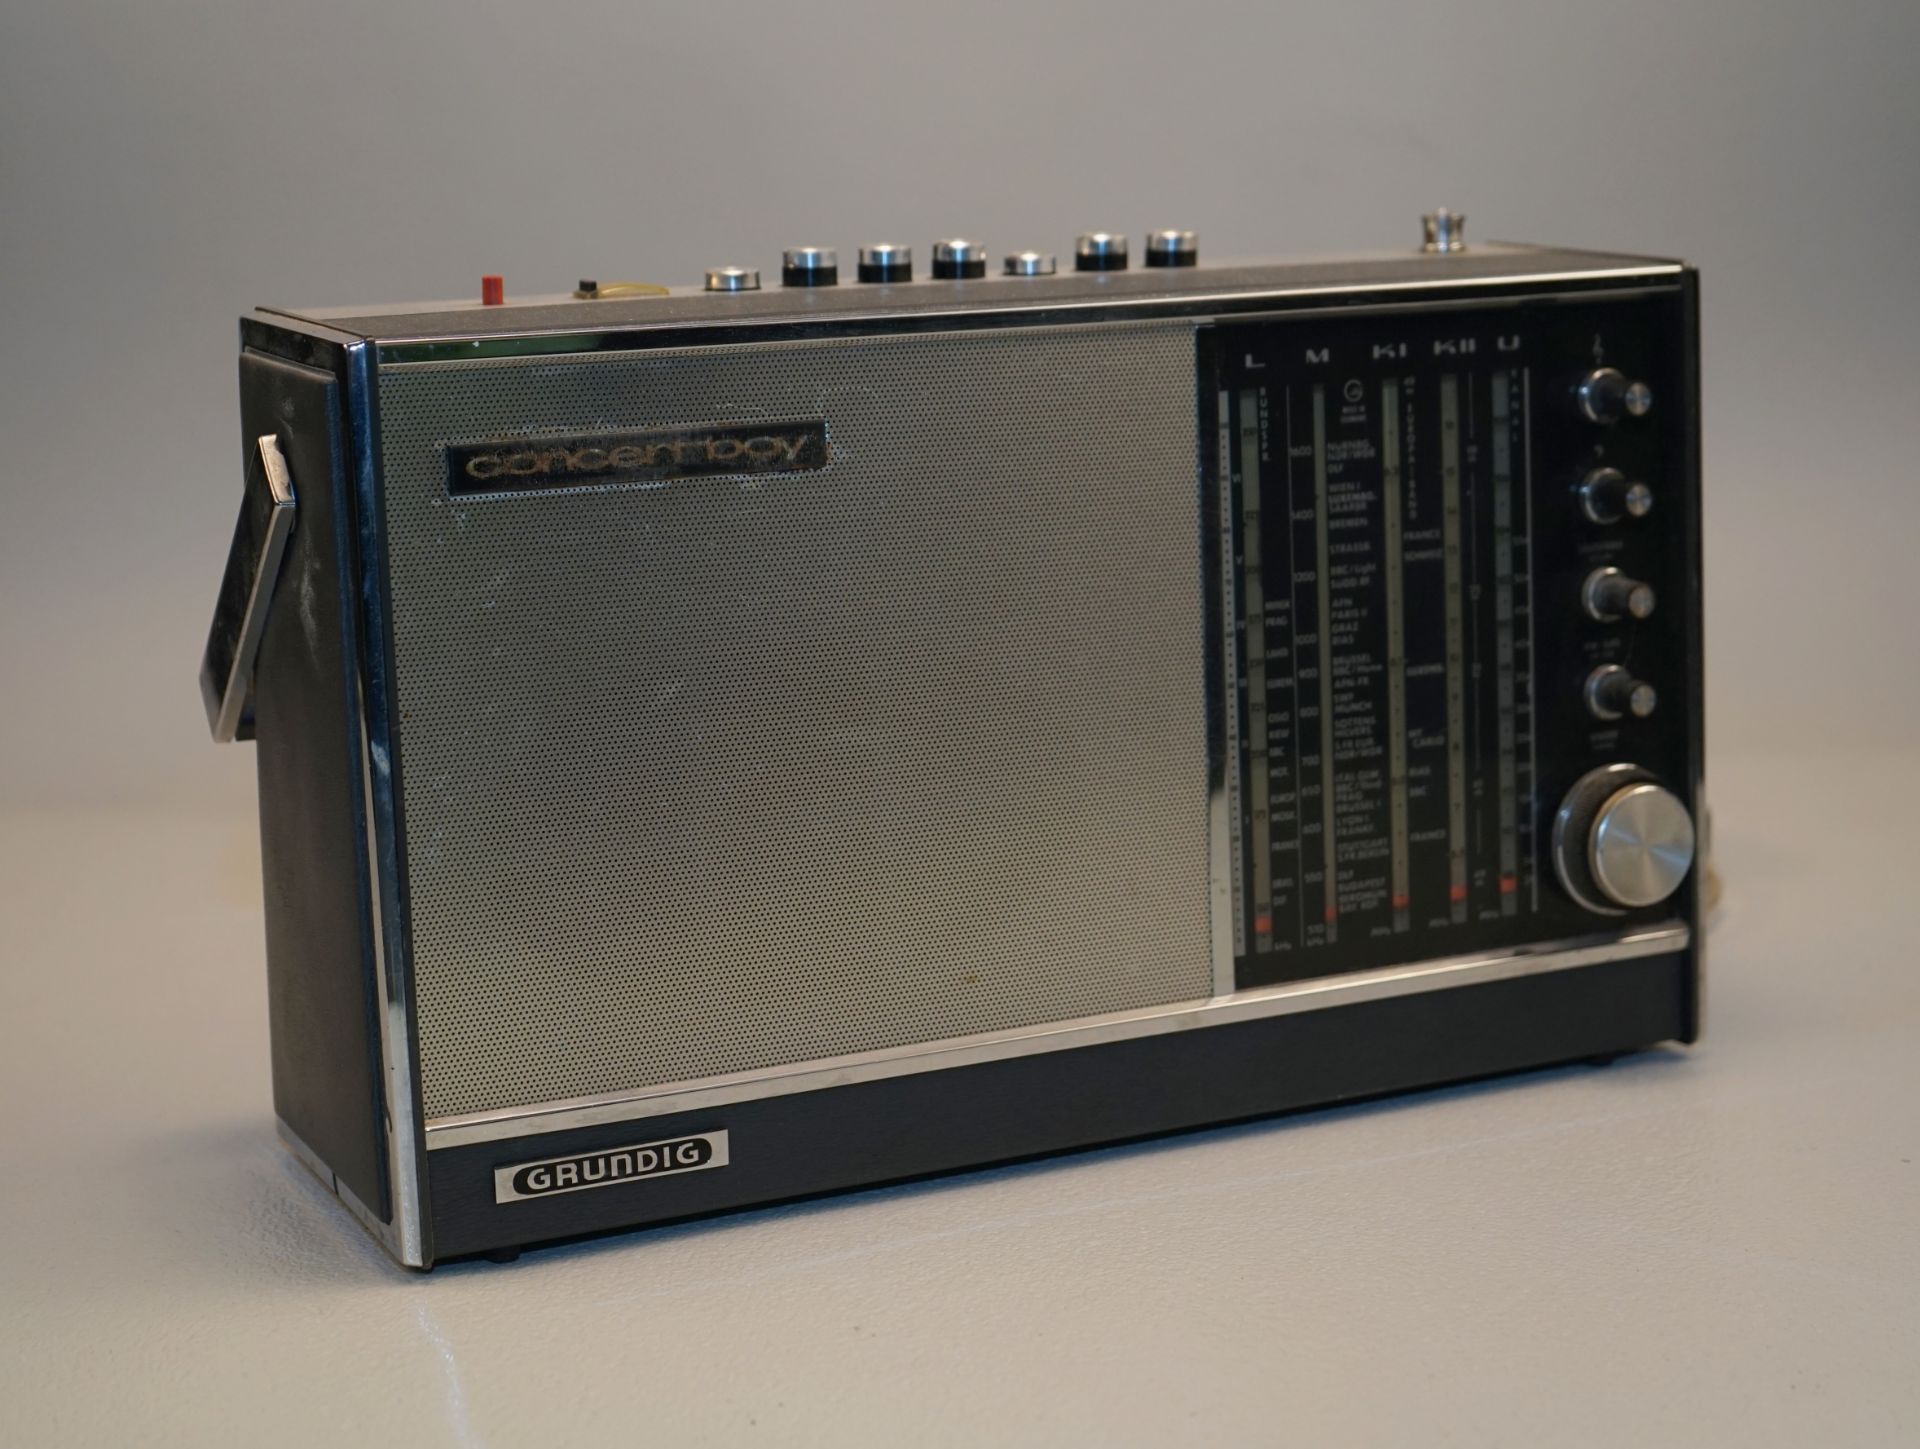 Grundig: Altes portables Radio Modell " Concert-Boy automatic 209", 1969,Transistor-Kofferradio - Image 2 of 2